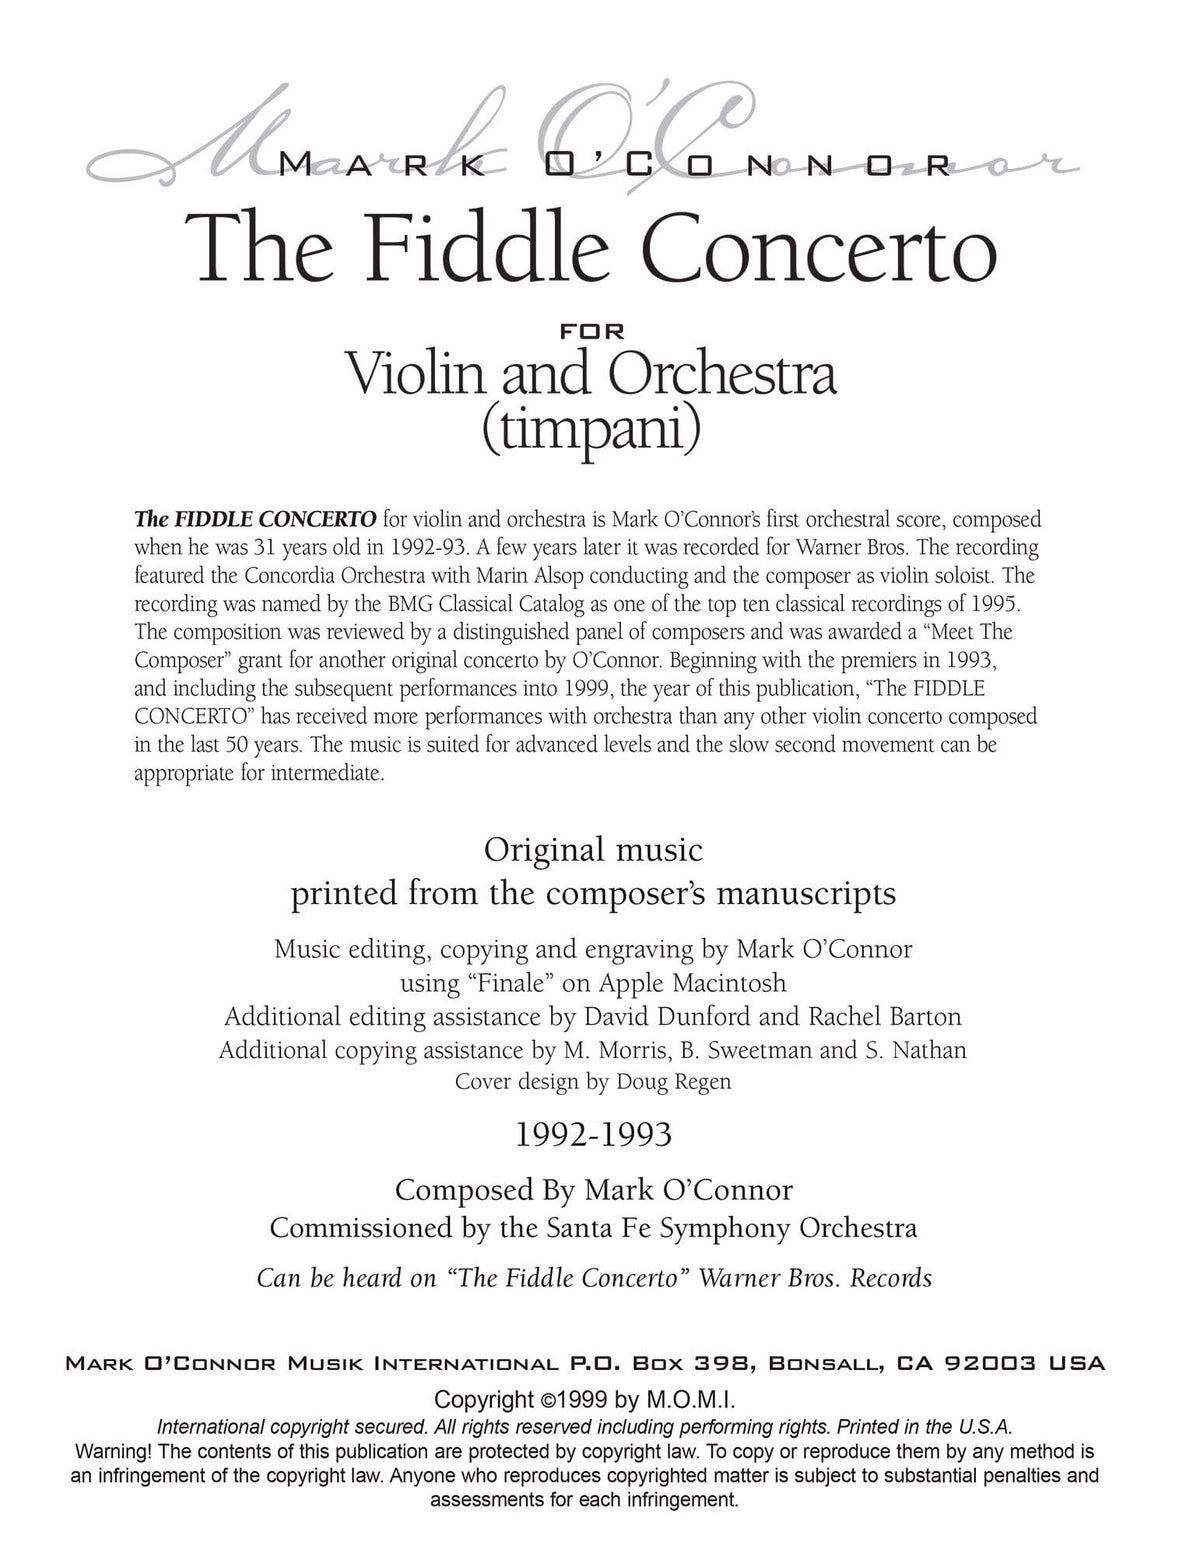 O'Connor, Mark - The FIDDLE CONCERTO for Violin and Orchestra - Percussion Parts - Digital Download